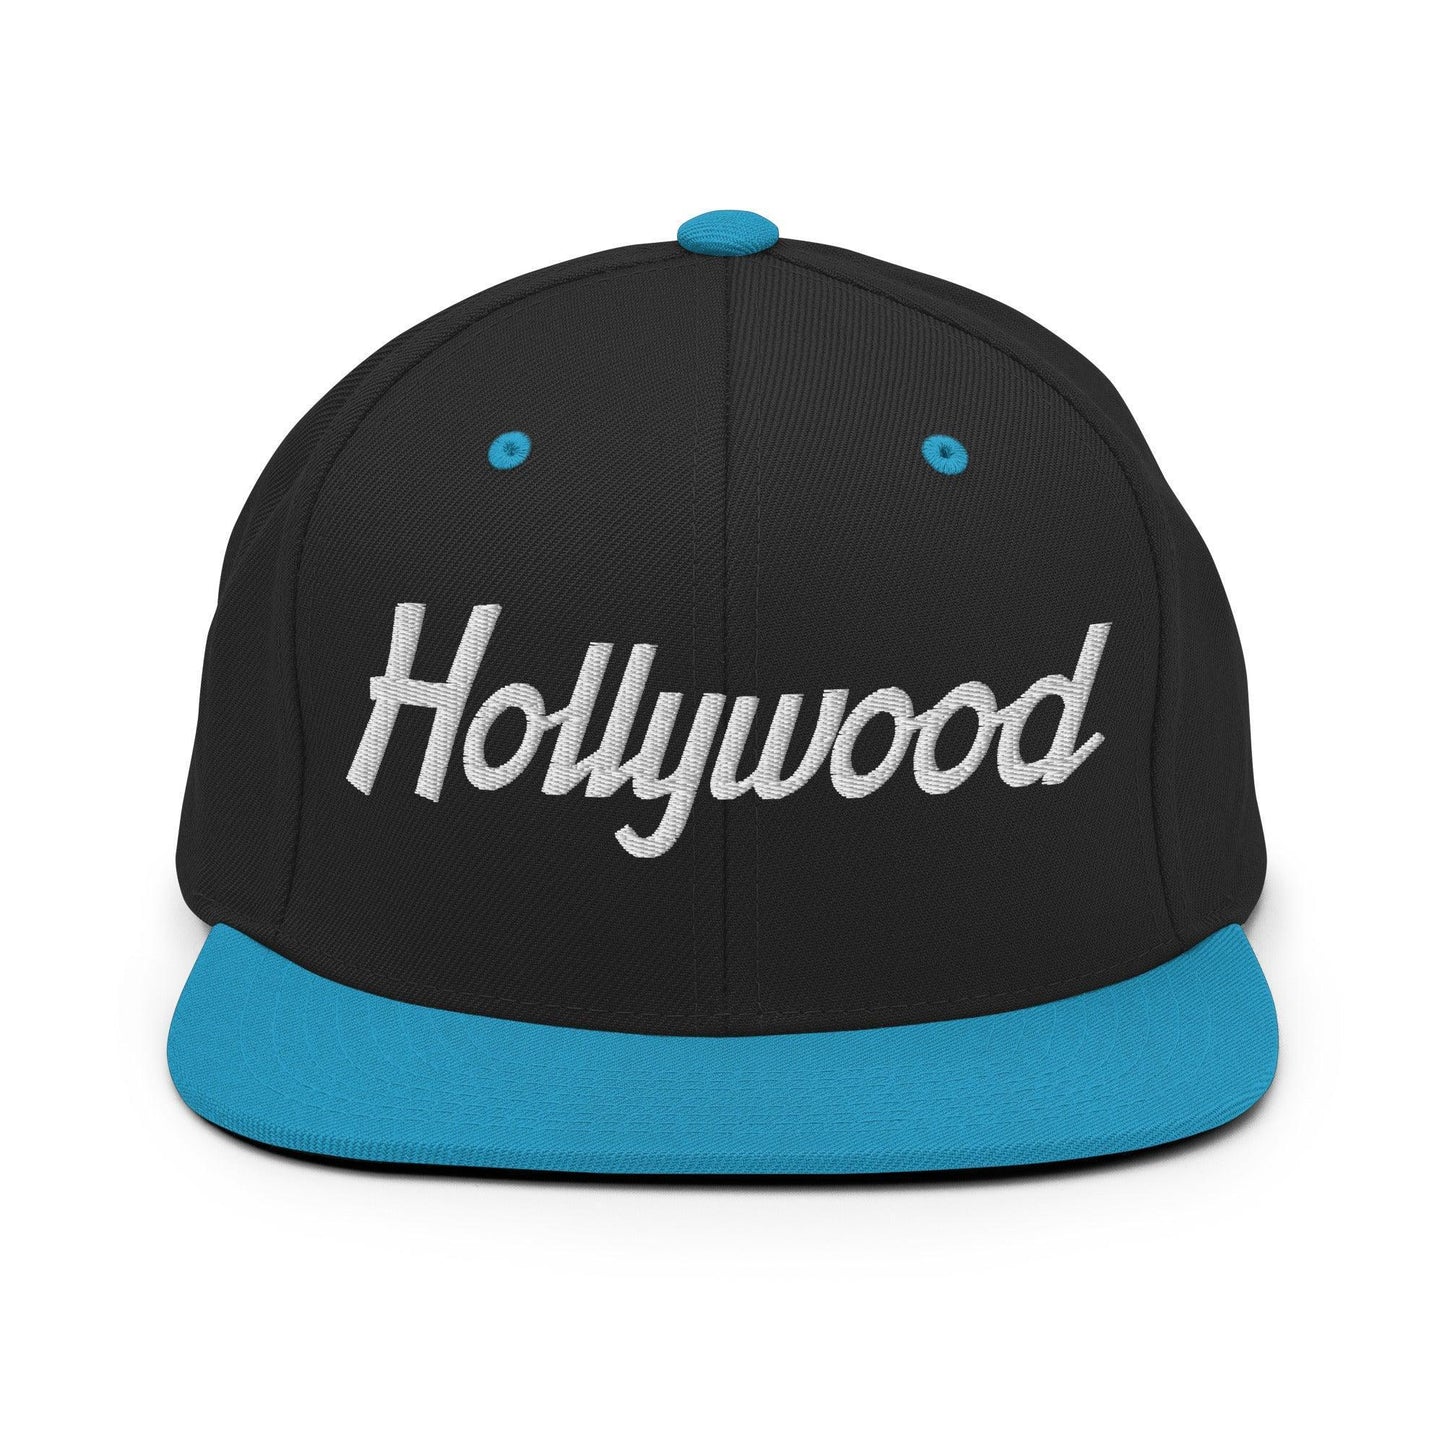 Hollywood Script Snapback Hat Black/ Teal